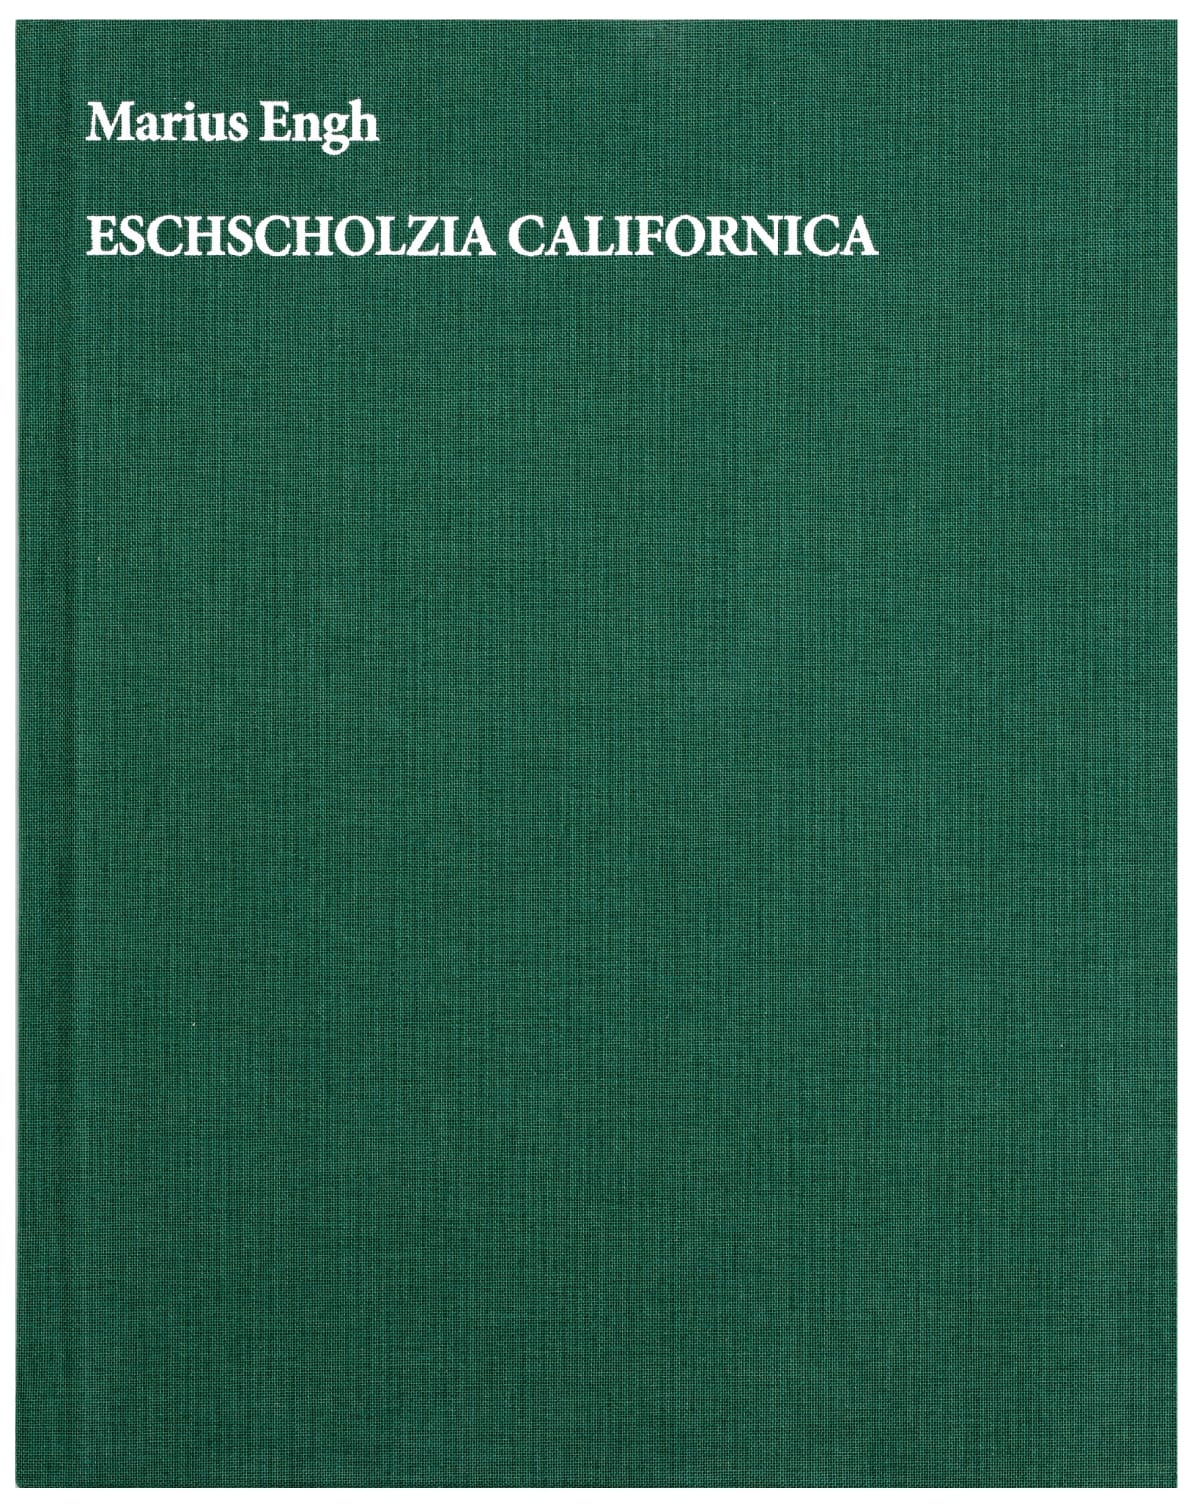 Eschscholzia Californica